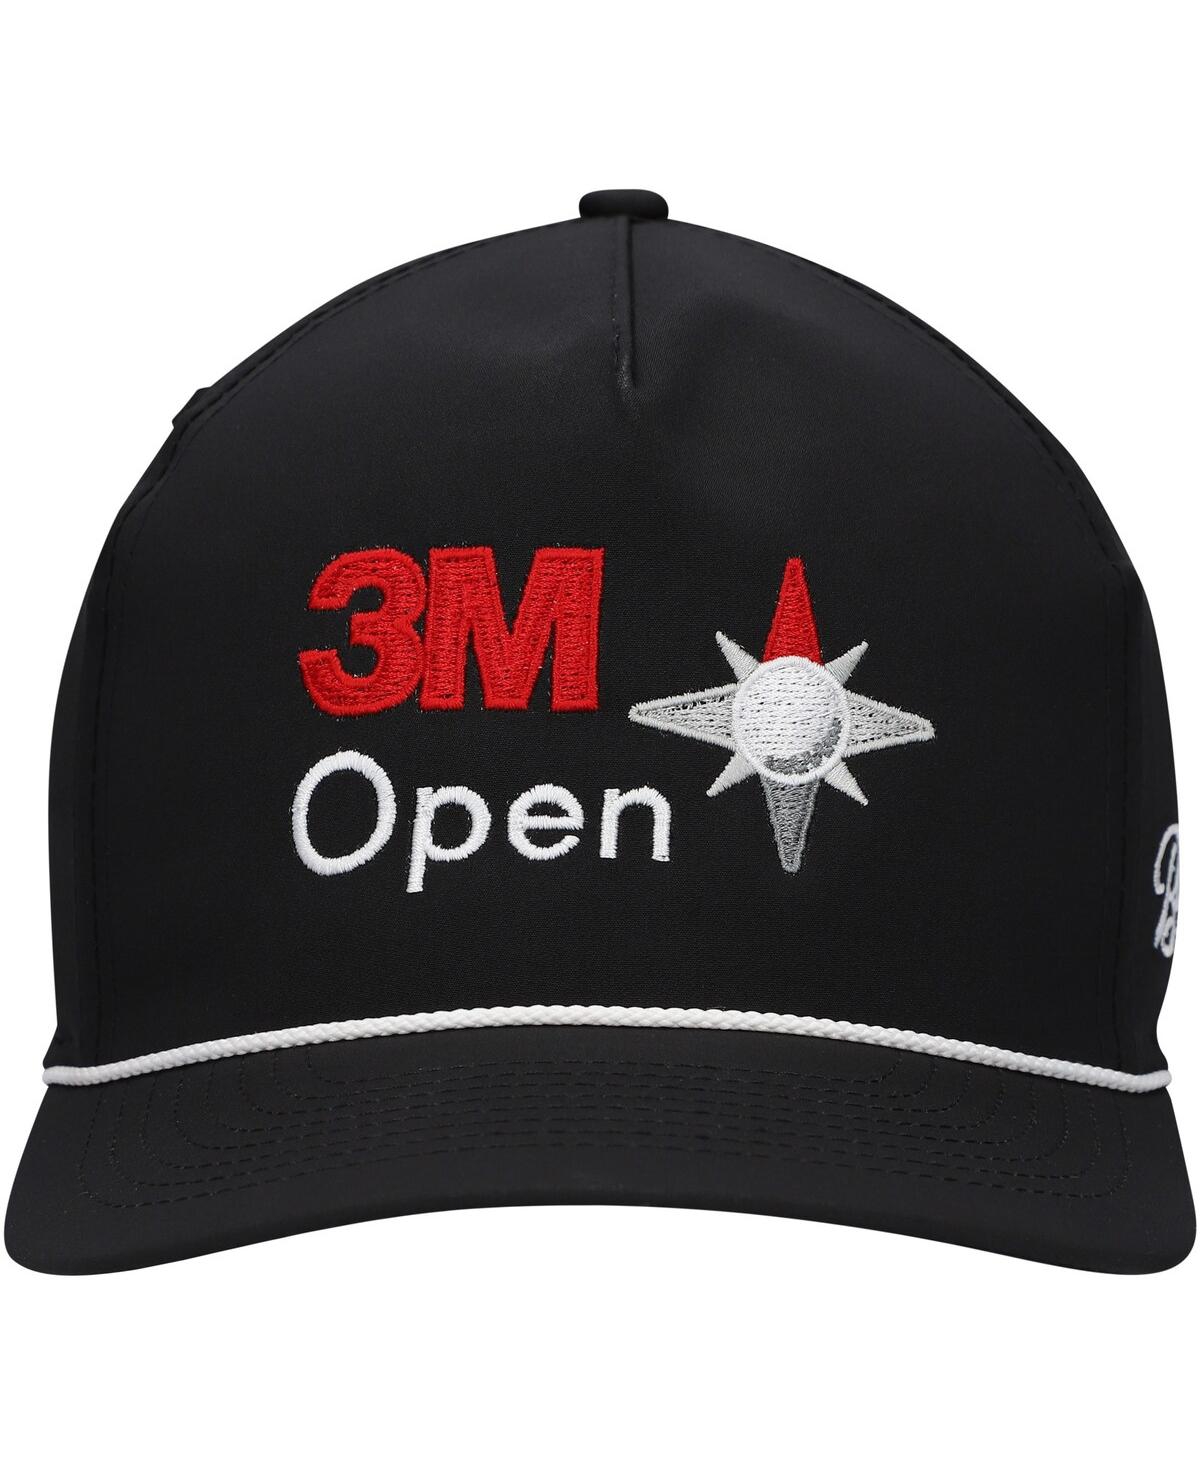 Shop Barstool Golf Men's  Black 3m Open Rope Snapback Hat